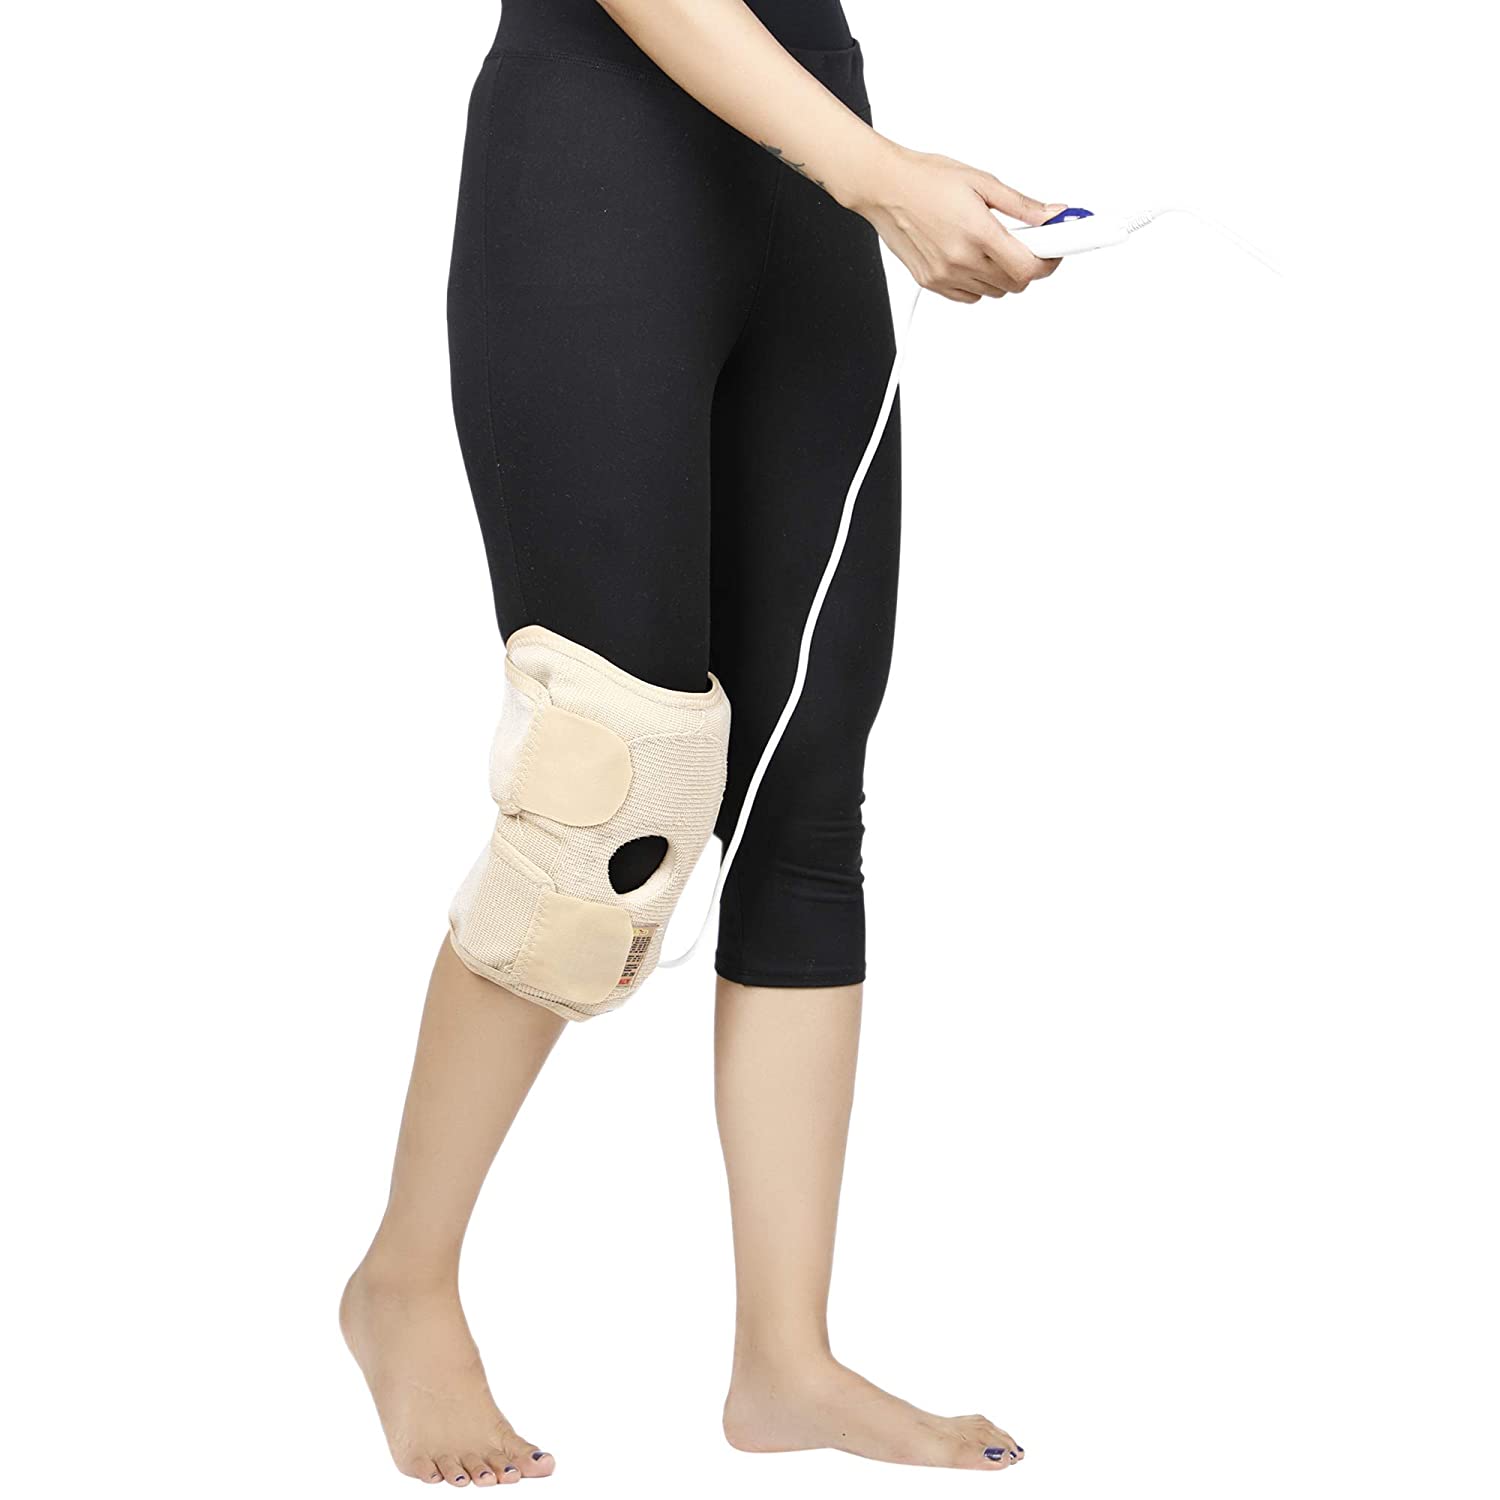 Vissco Universal Knee Orthosis with Electric Heating Pad (Skin)